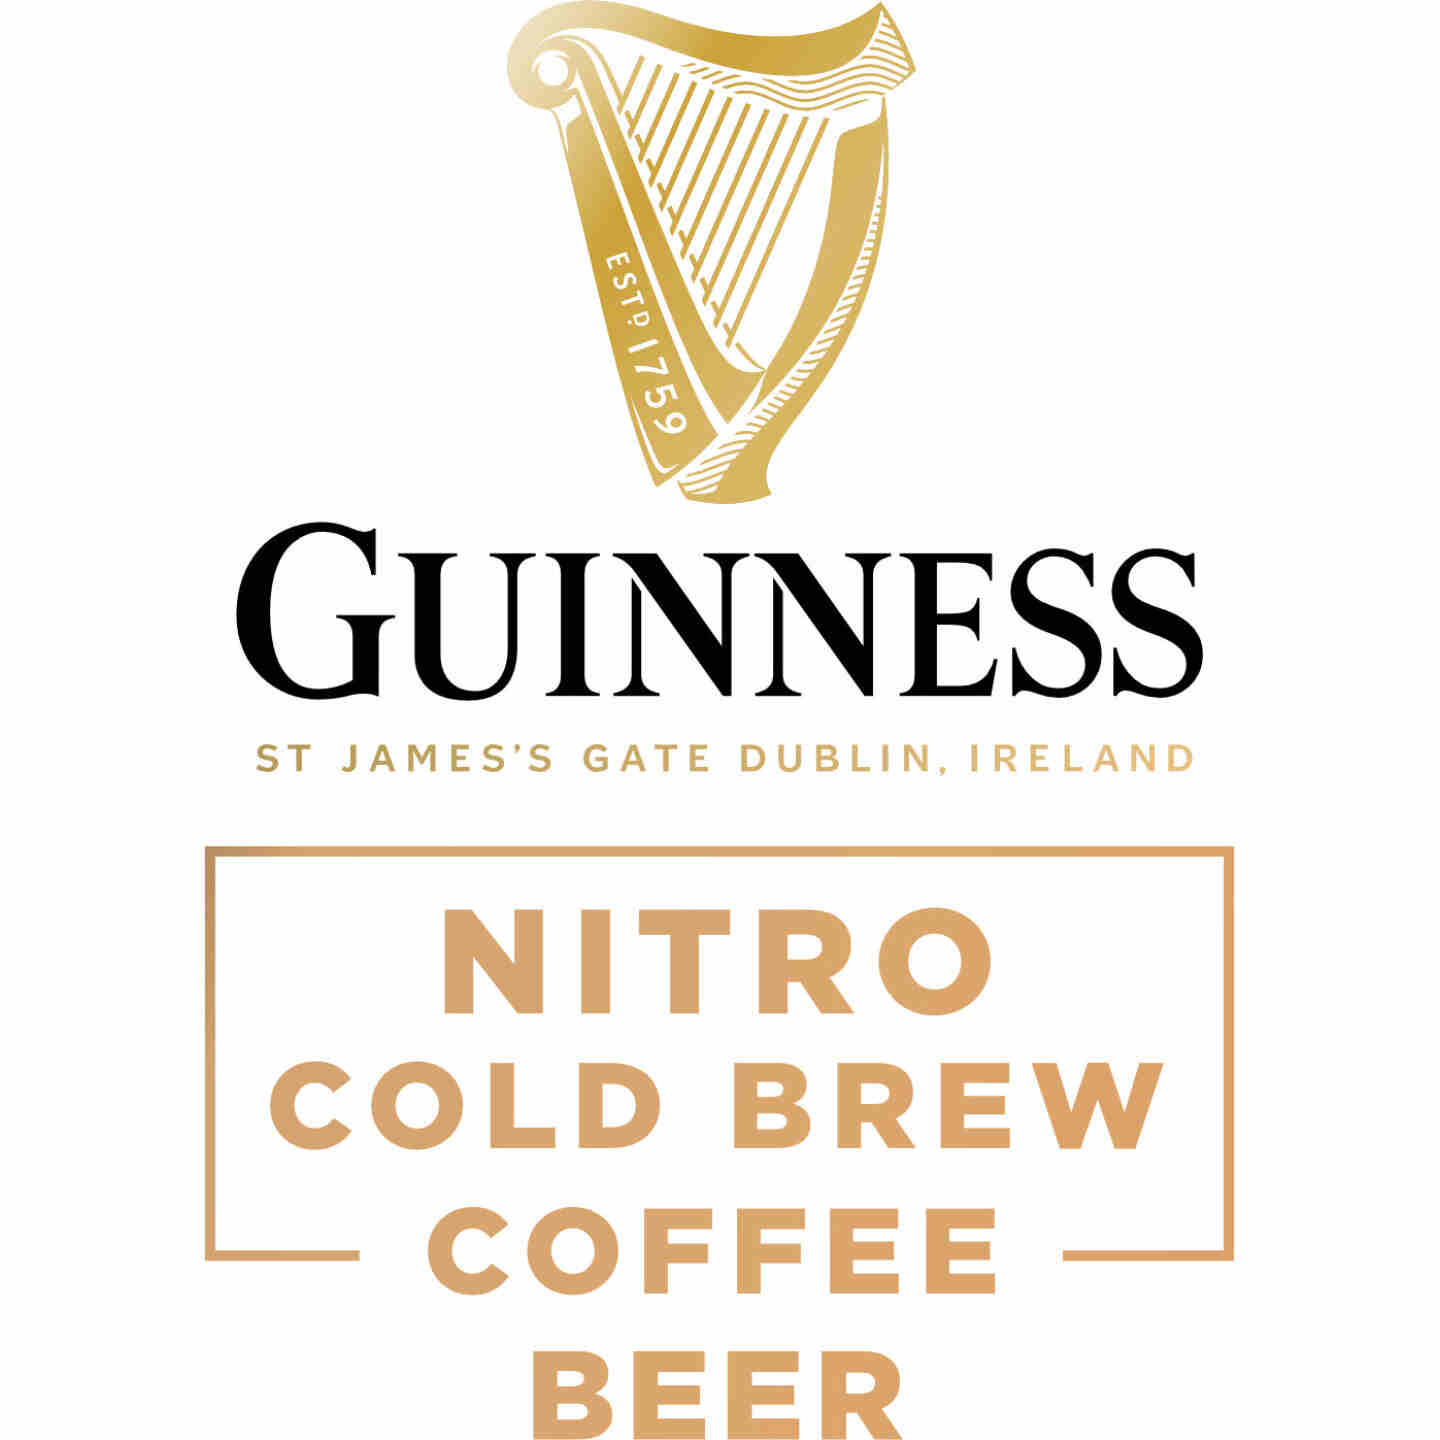 Guinness Coffee Image 1